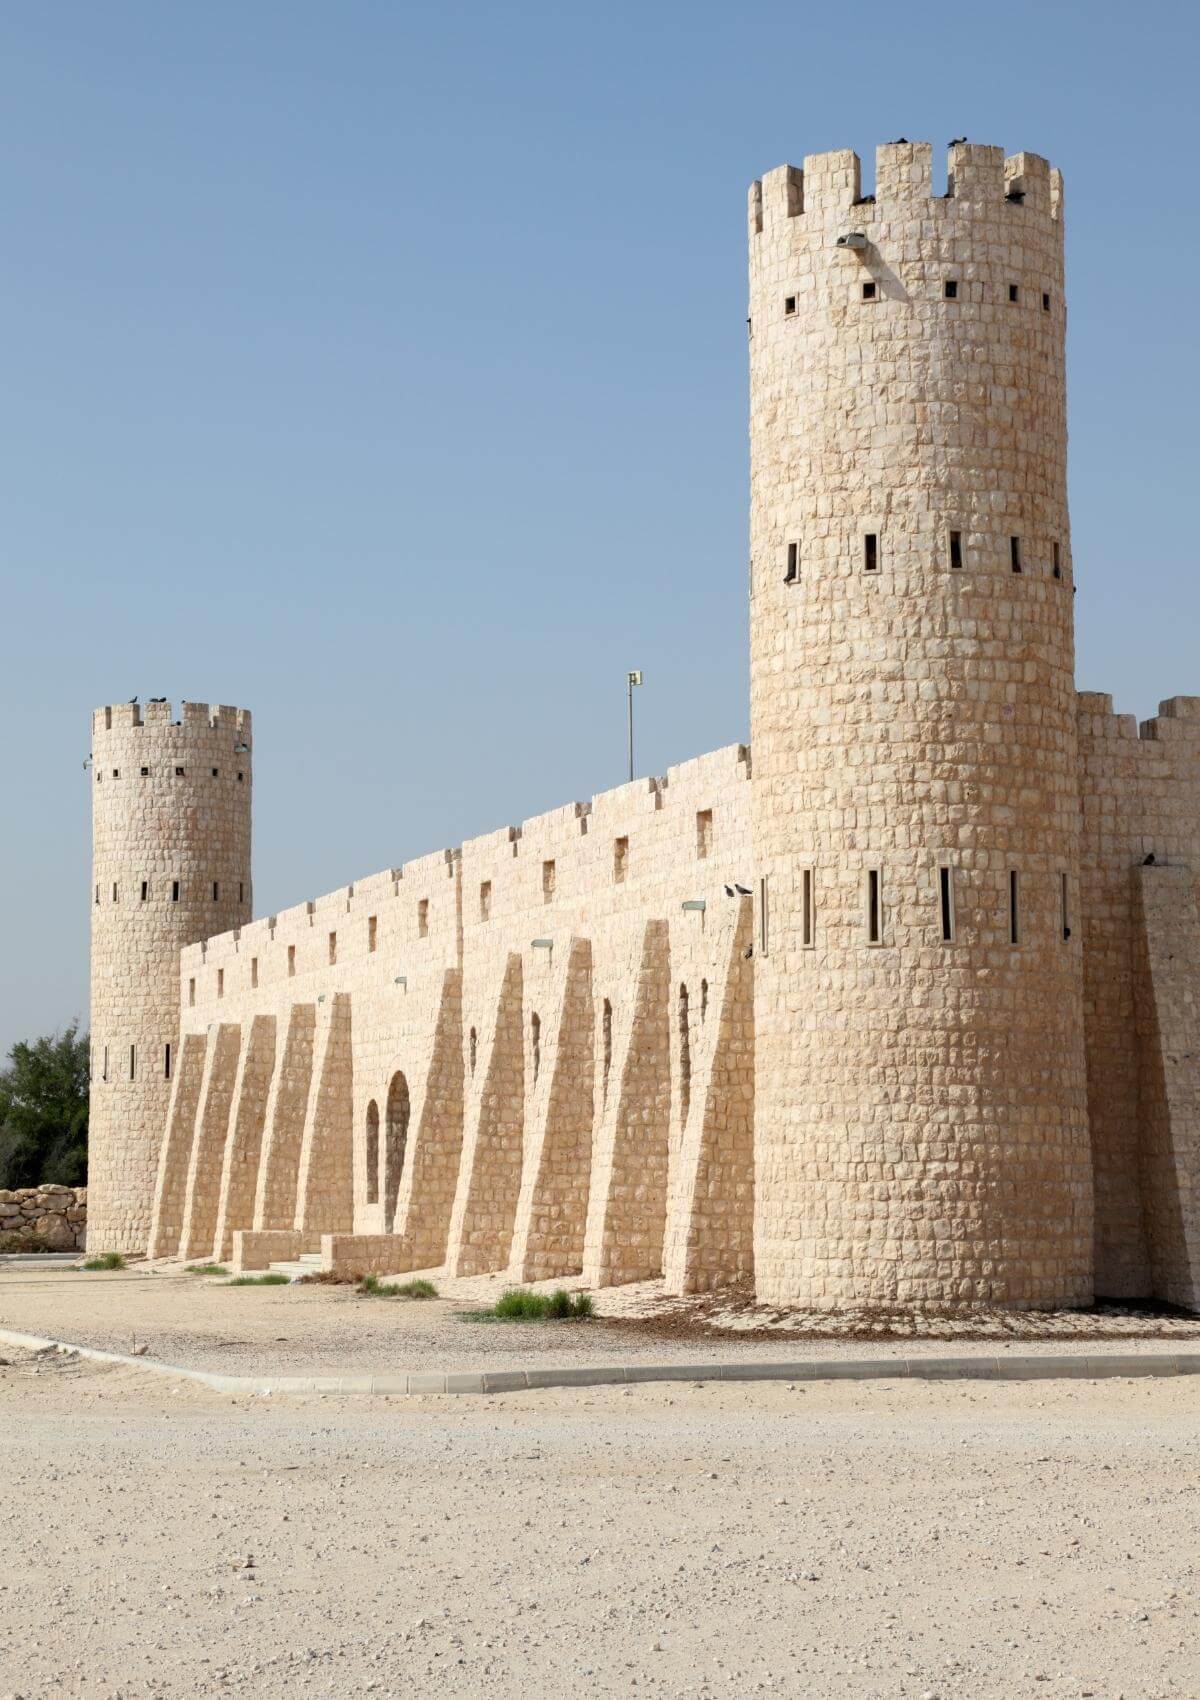 Sheikh Faisal Bin Qassim al Thani Museum